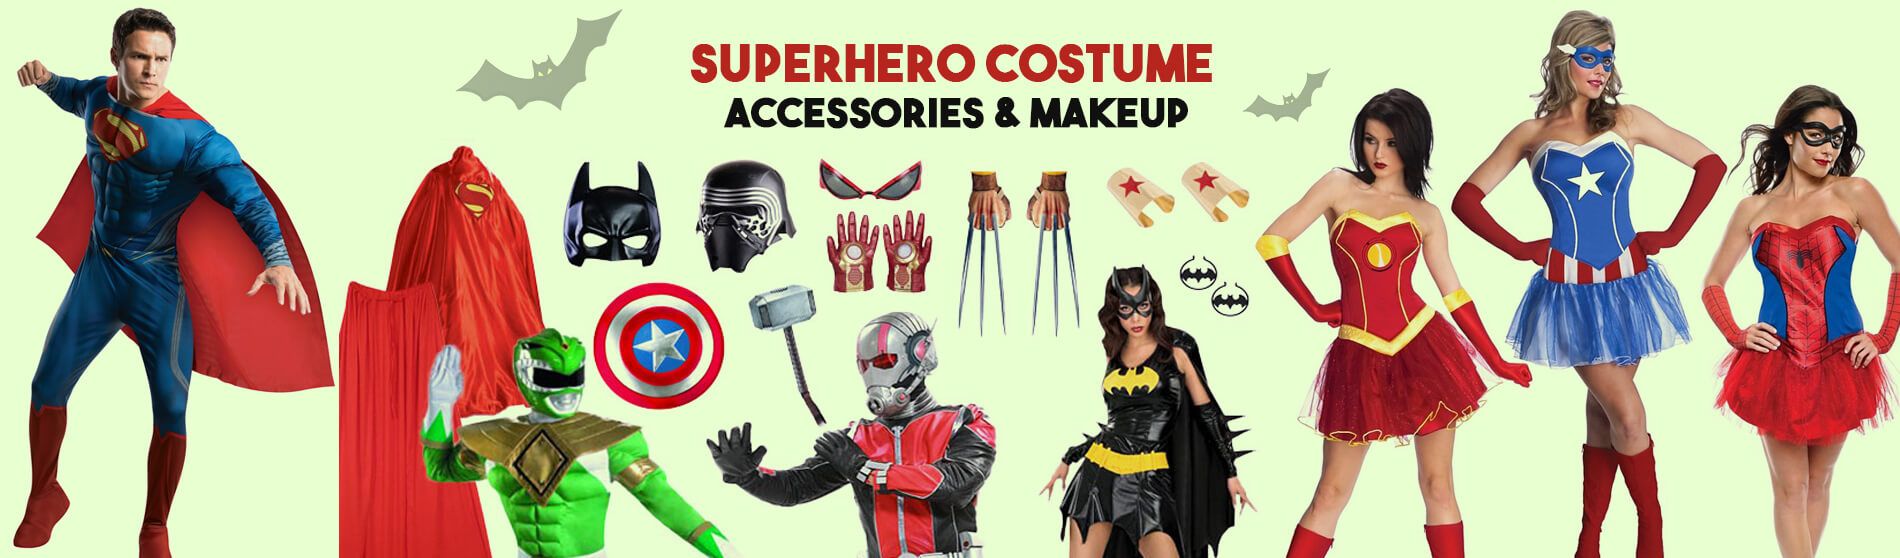 Glendale Halloween : Superhero-Costume-Accessories